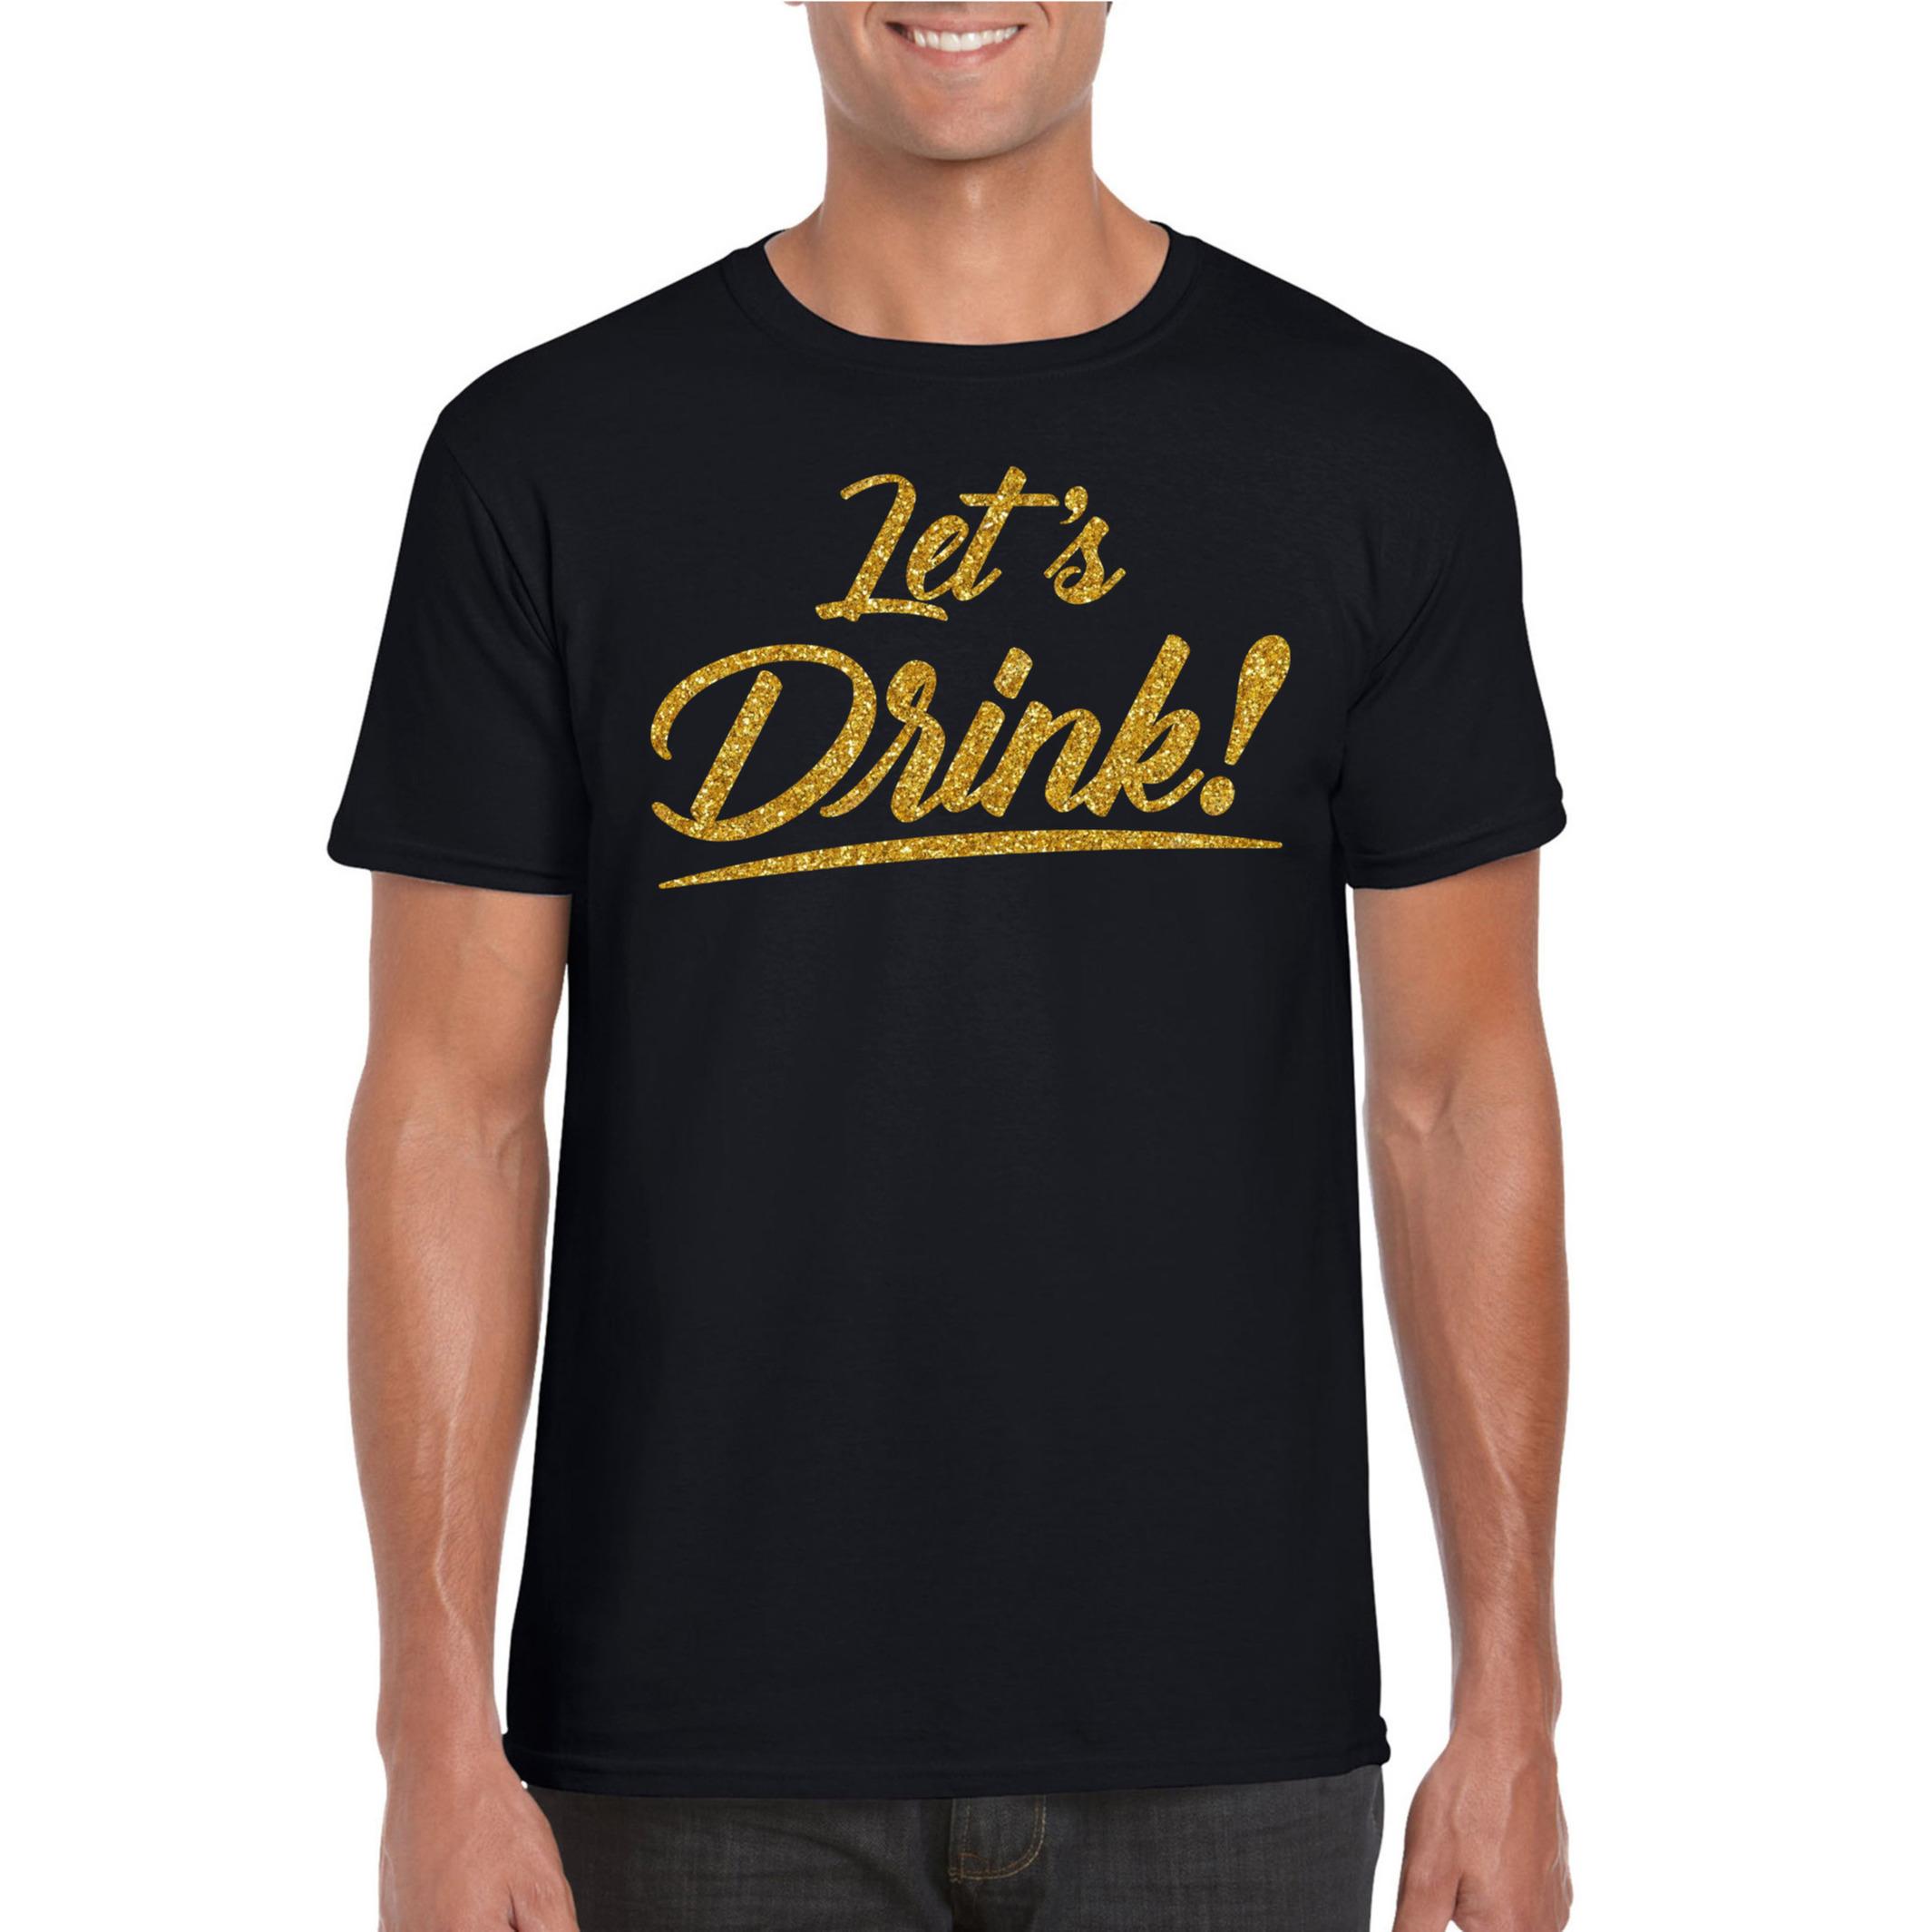 Lets drink goud tekst t-shirt zwart heren Oud en Nieuw-Glitter en Glamour goud party kleding